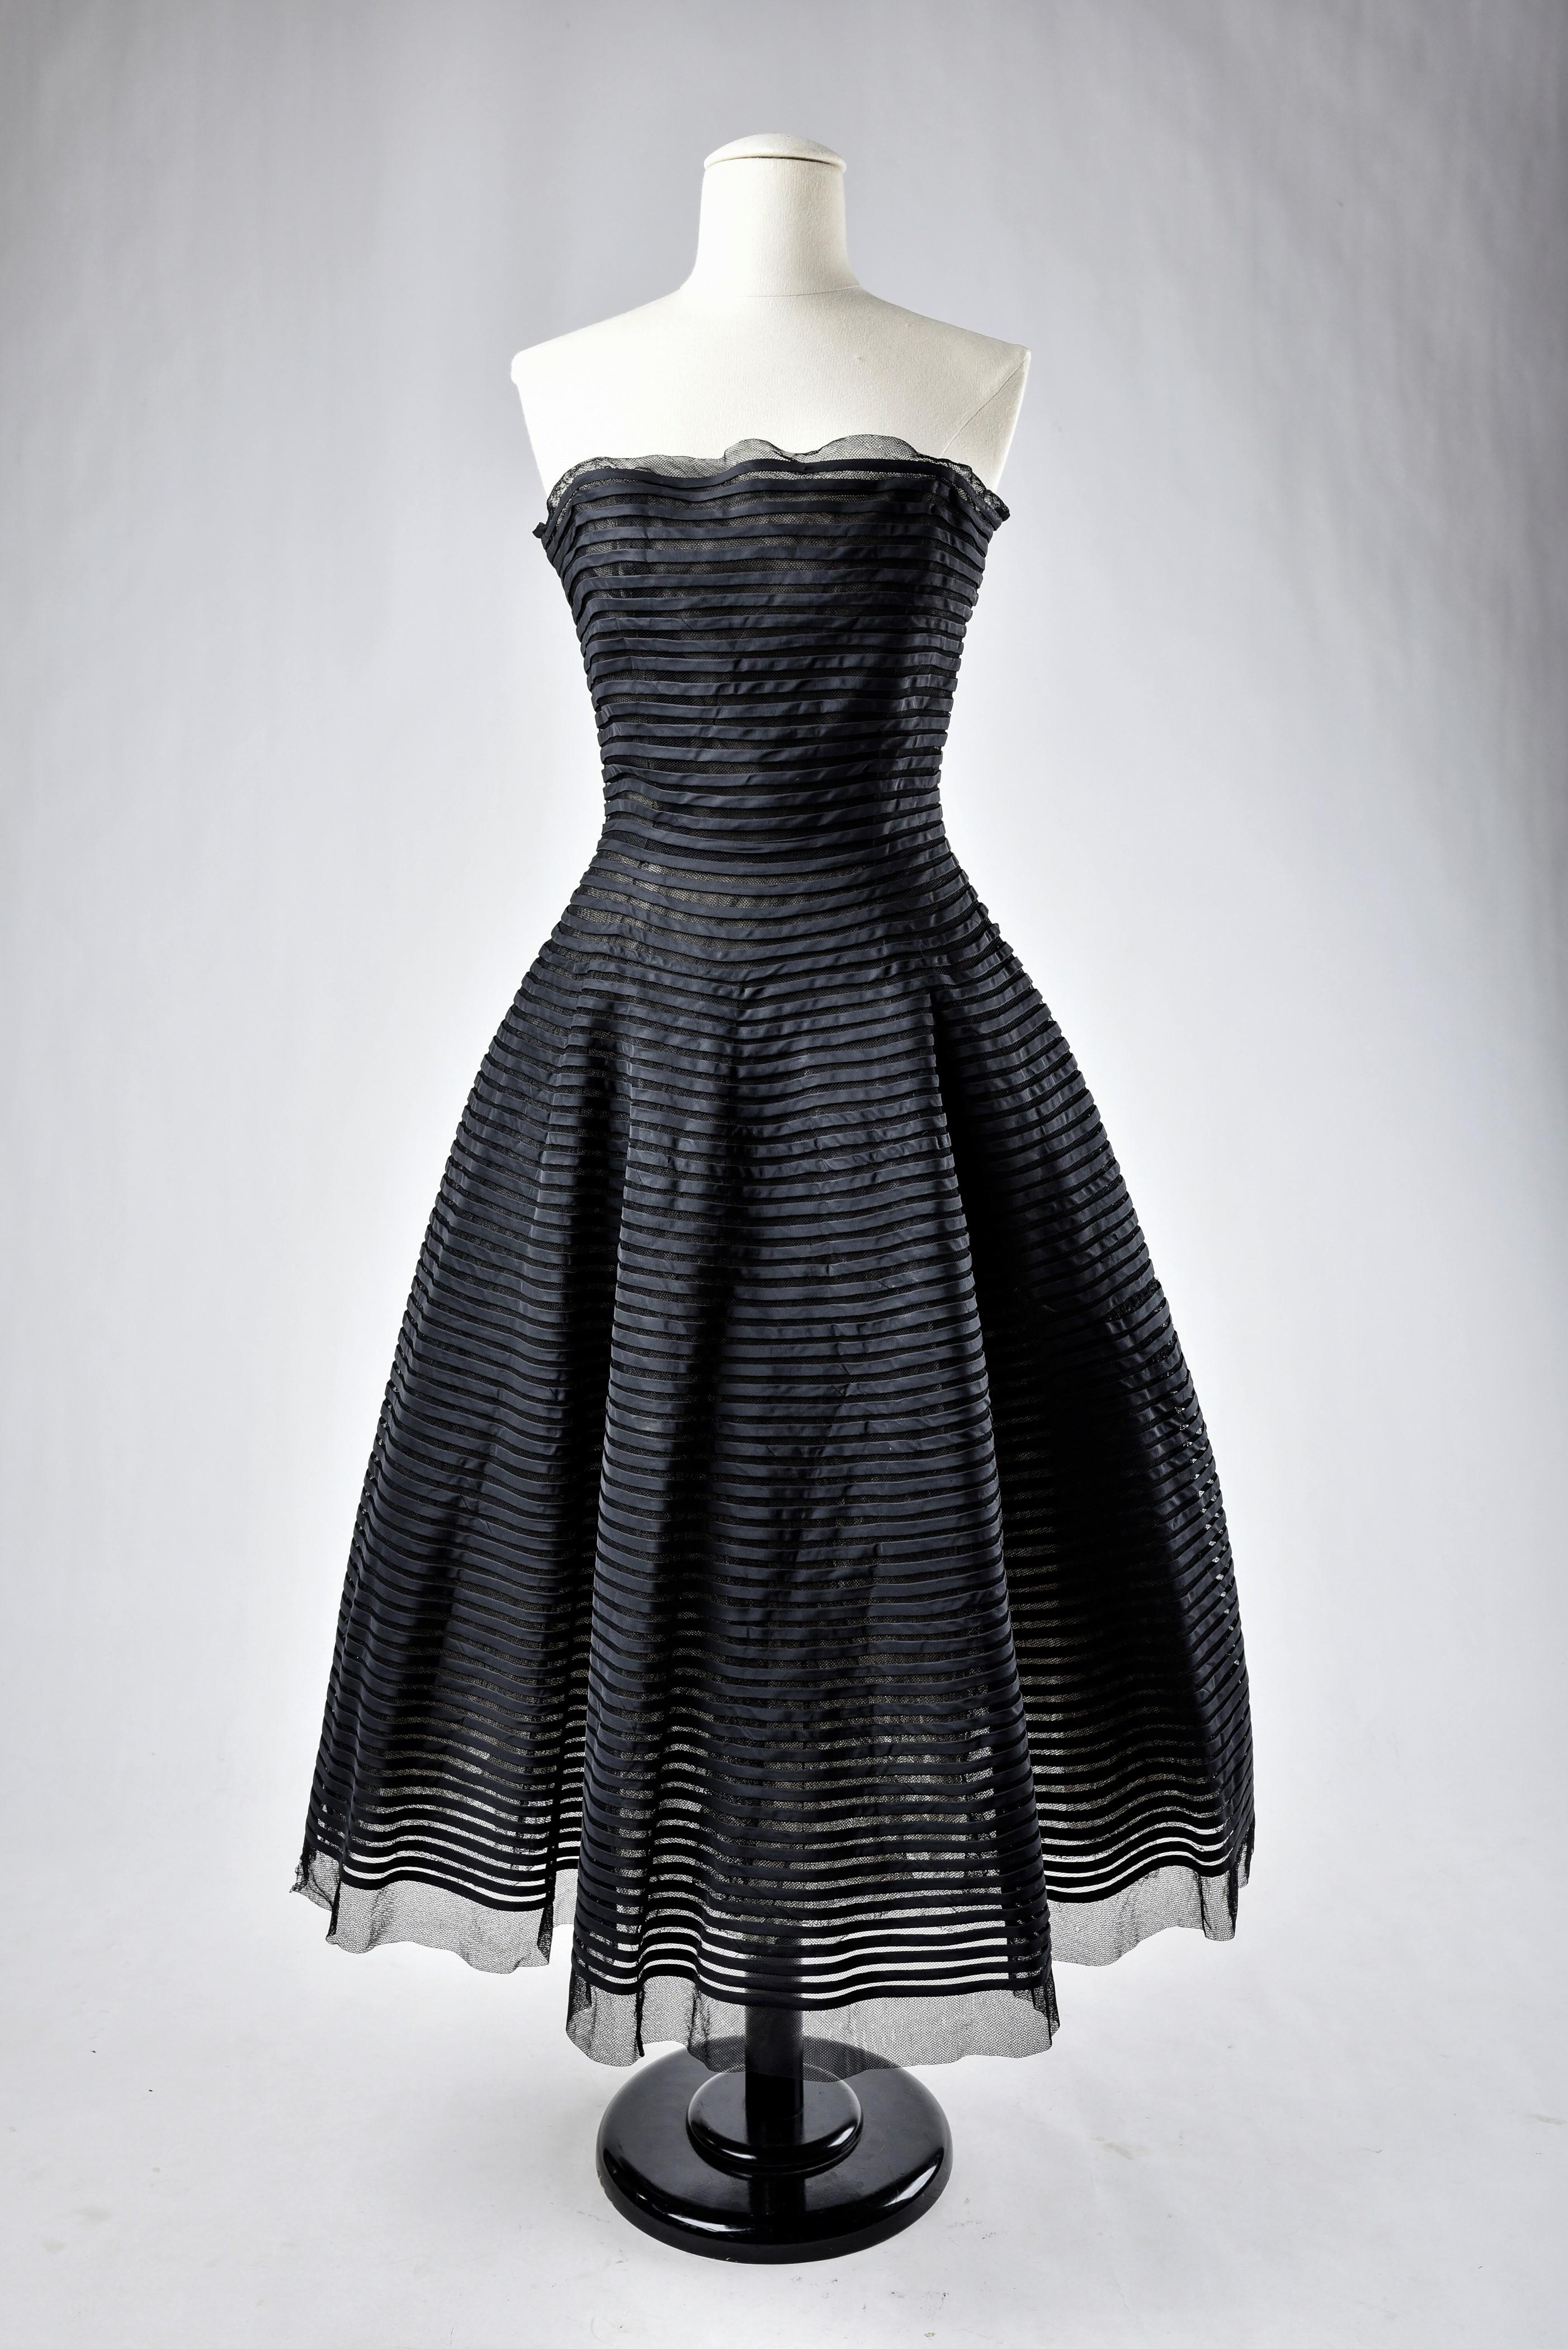 Black Christian Dior Ball Gown in black tulle & satin appliqué N° 363404 Circa 1955